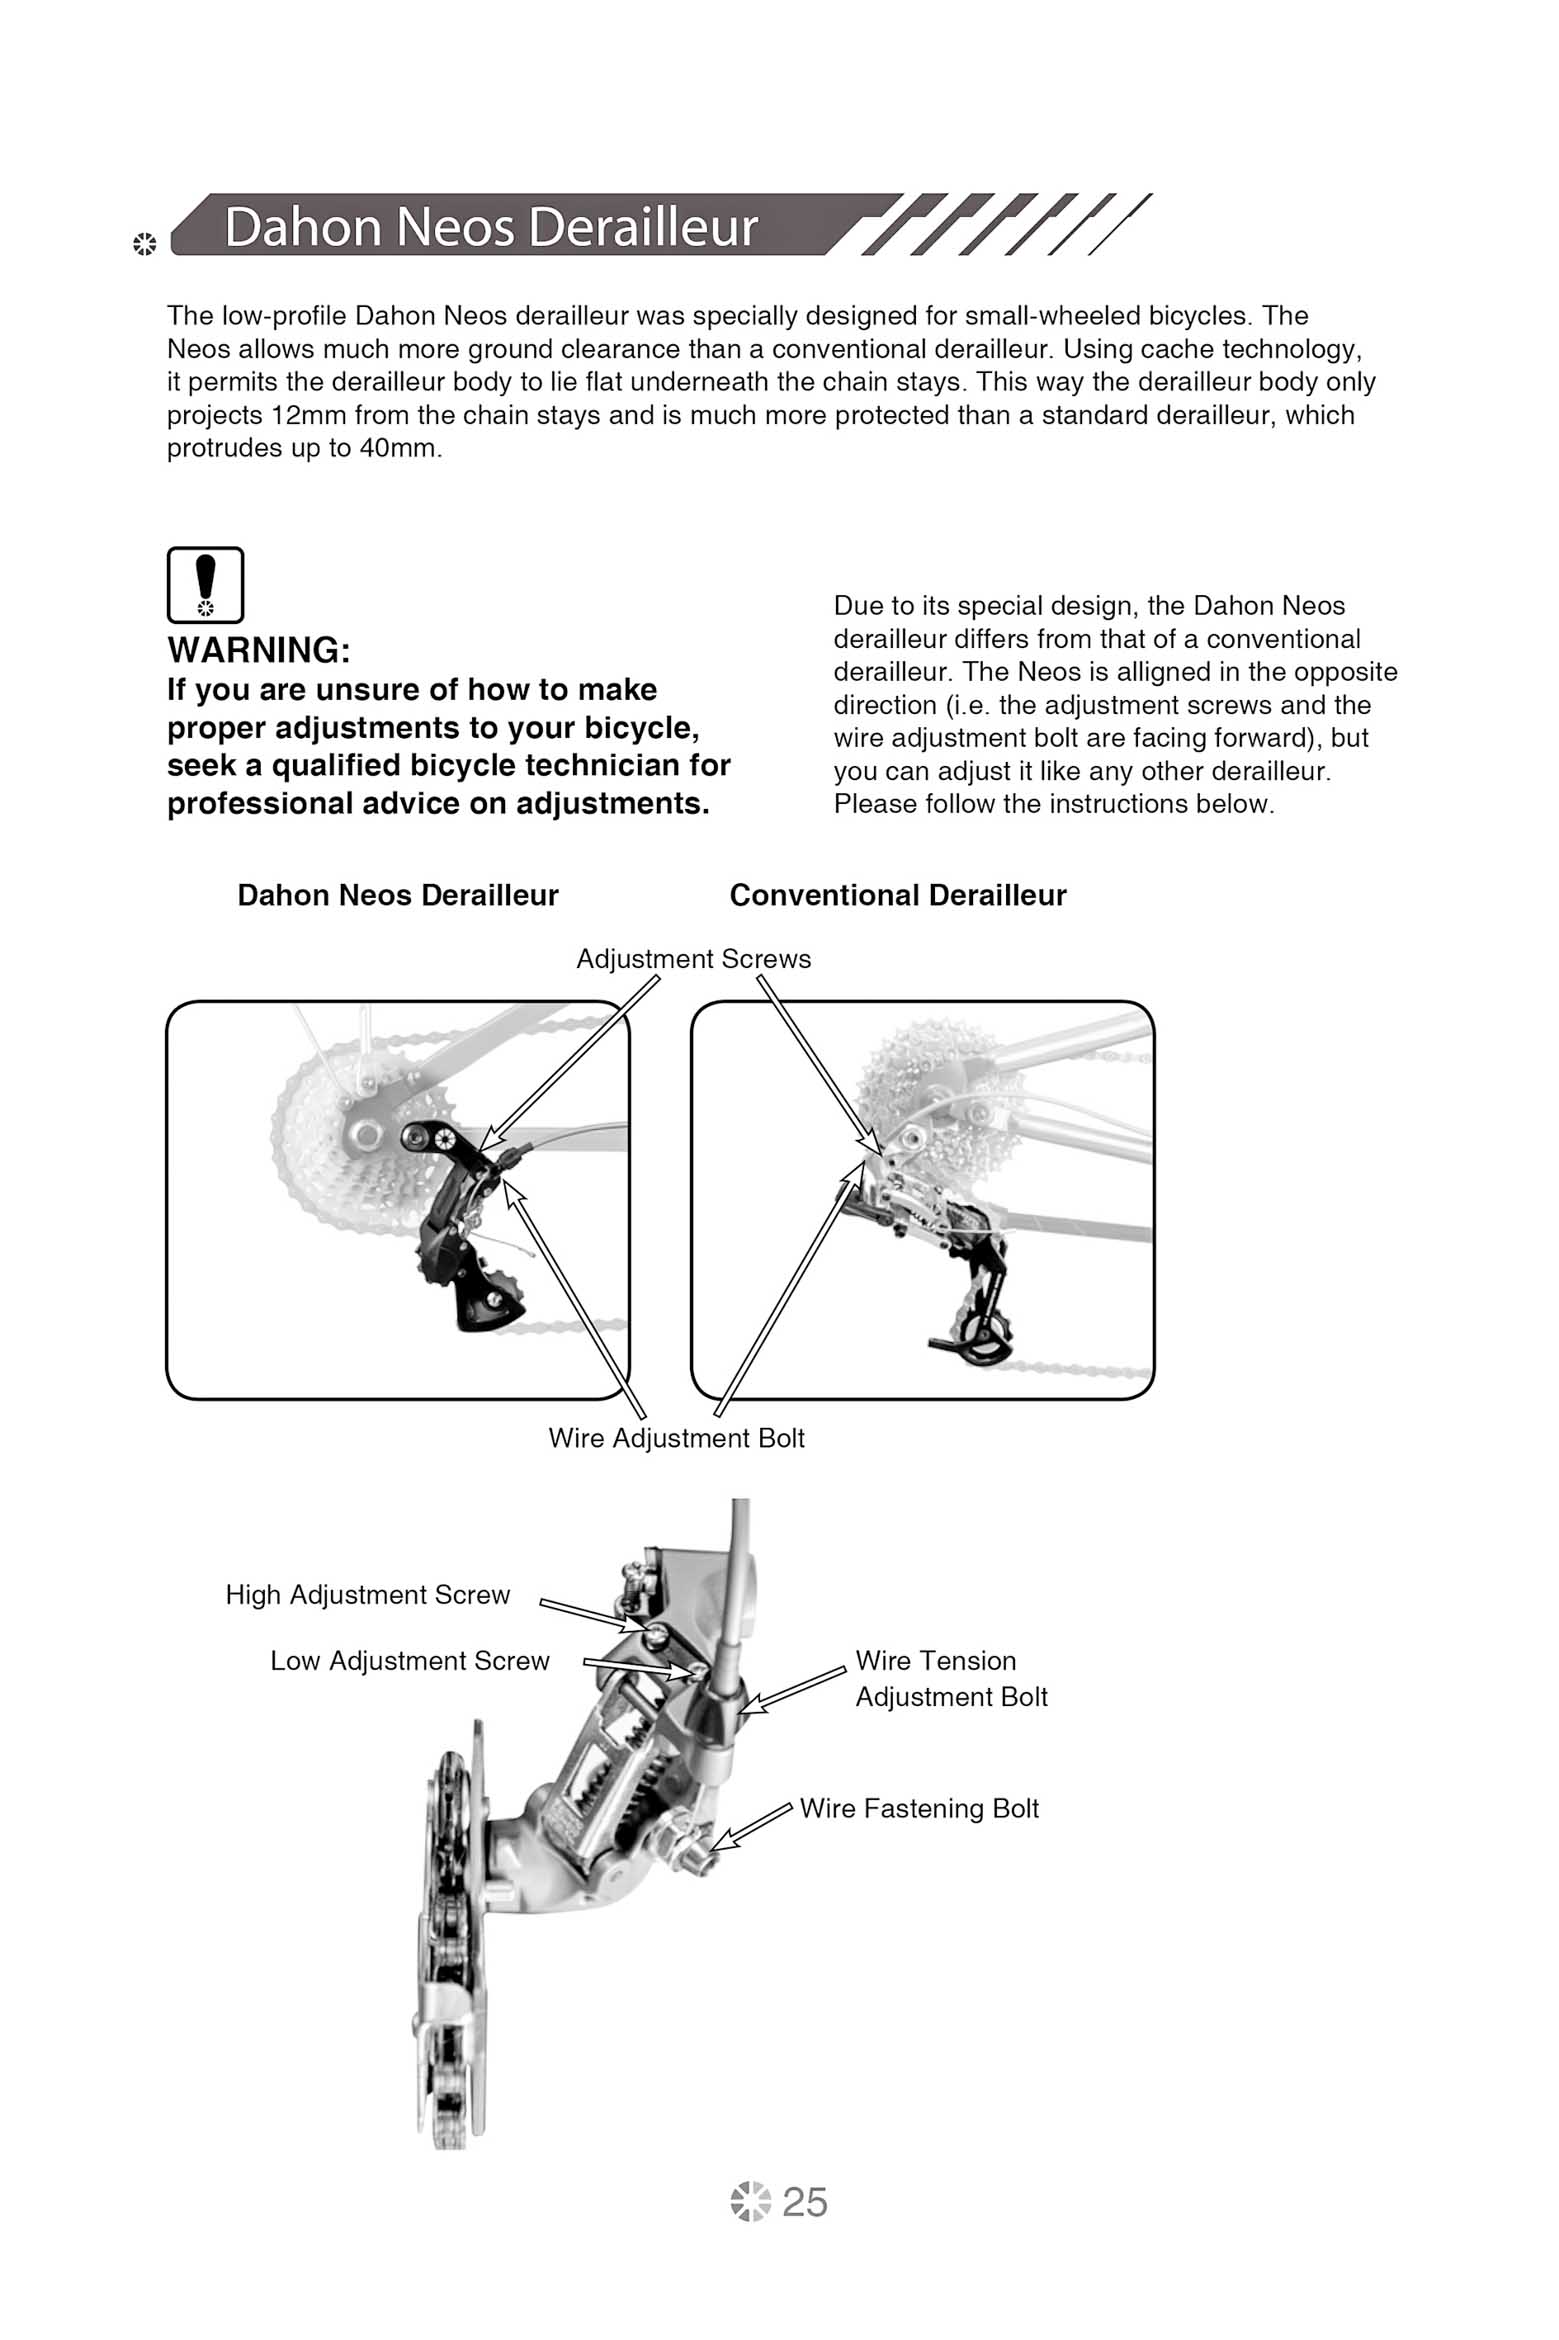 Dahon - Service Instructions 2012 page 25 main image